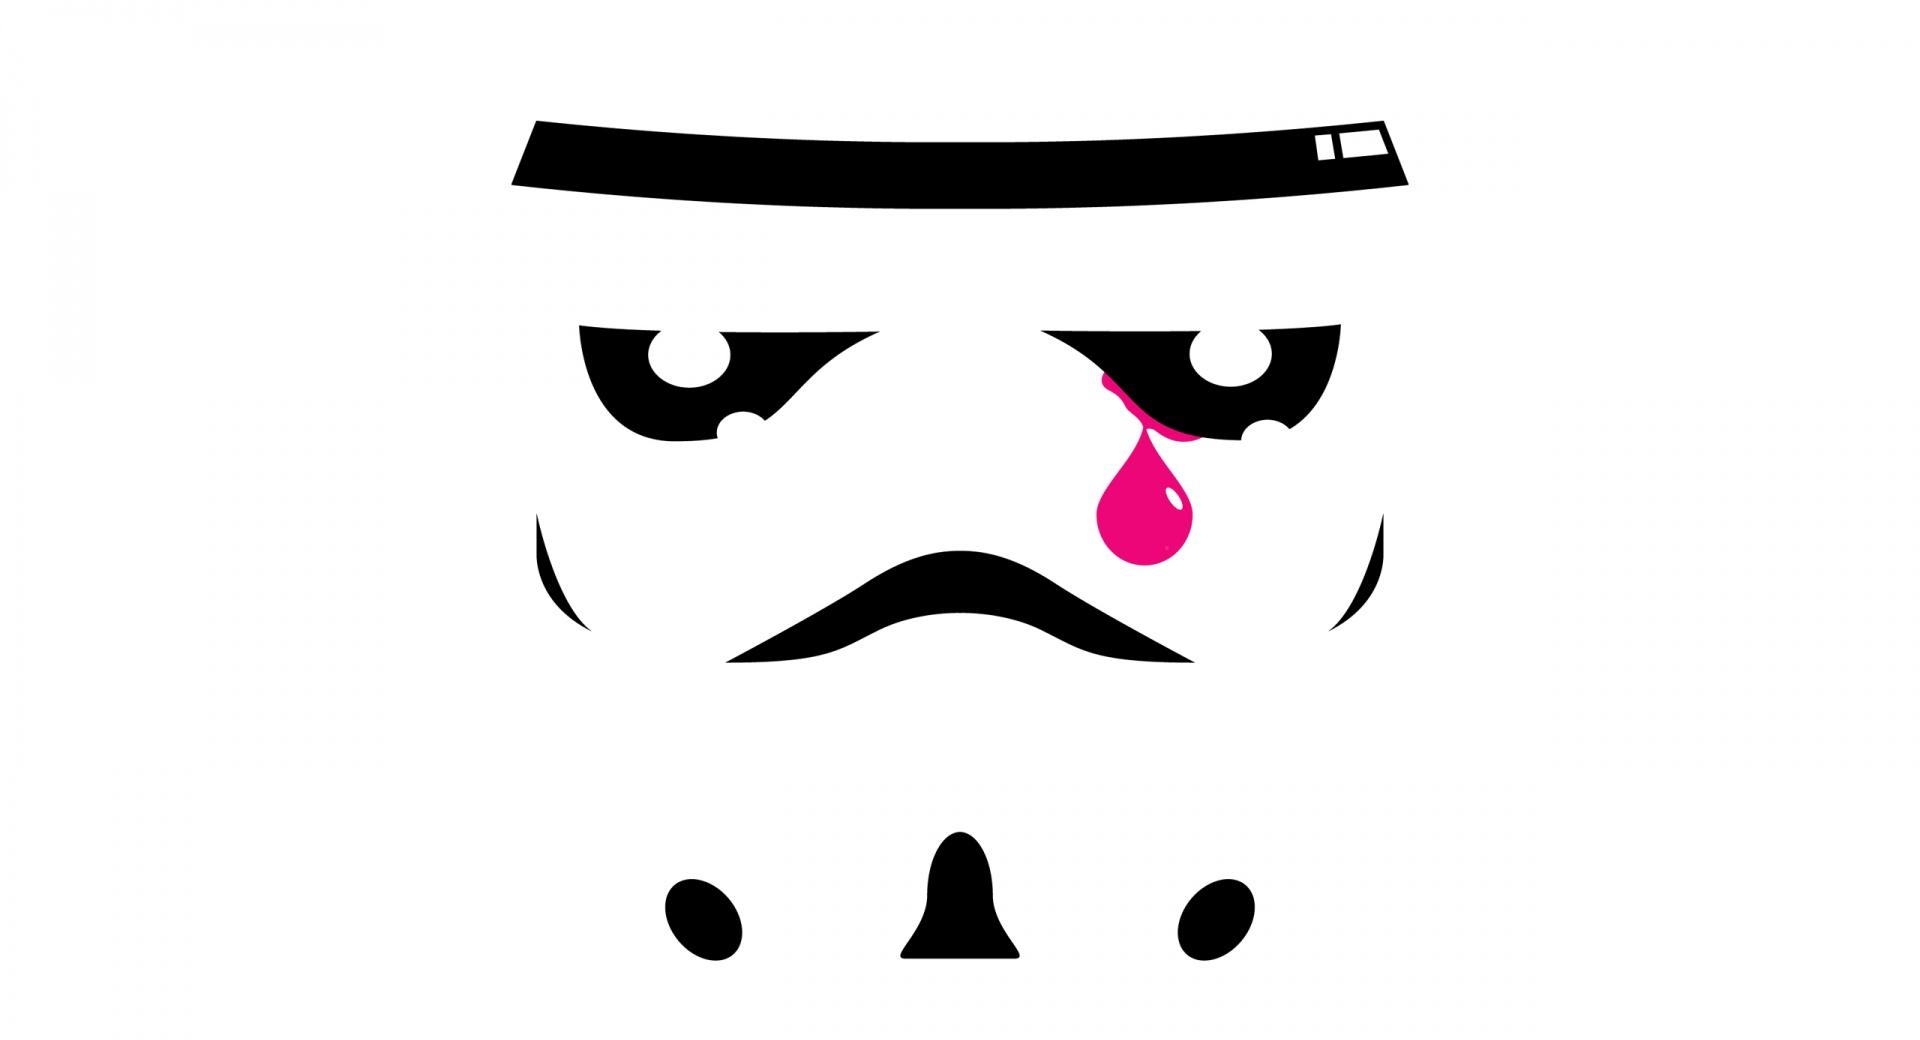 Star Wars Stormtrooper Tear at 1024 x 1024 iPad size wallpapers HD quality